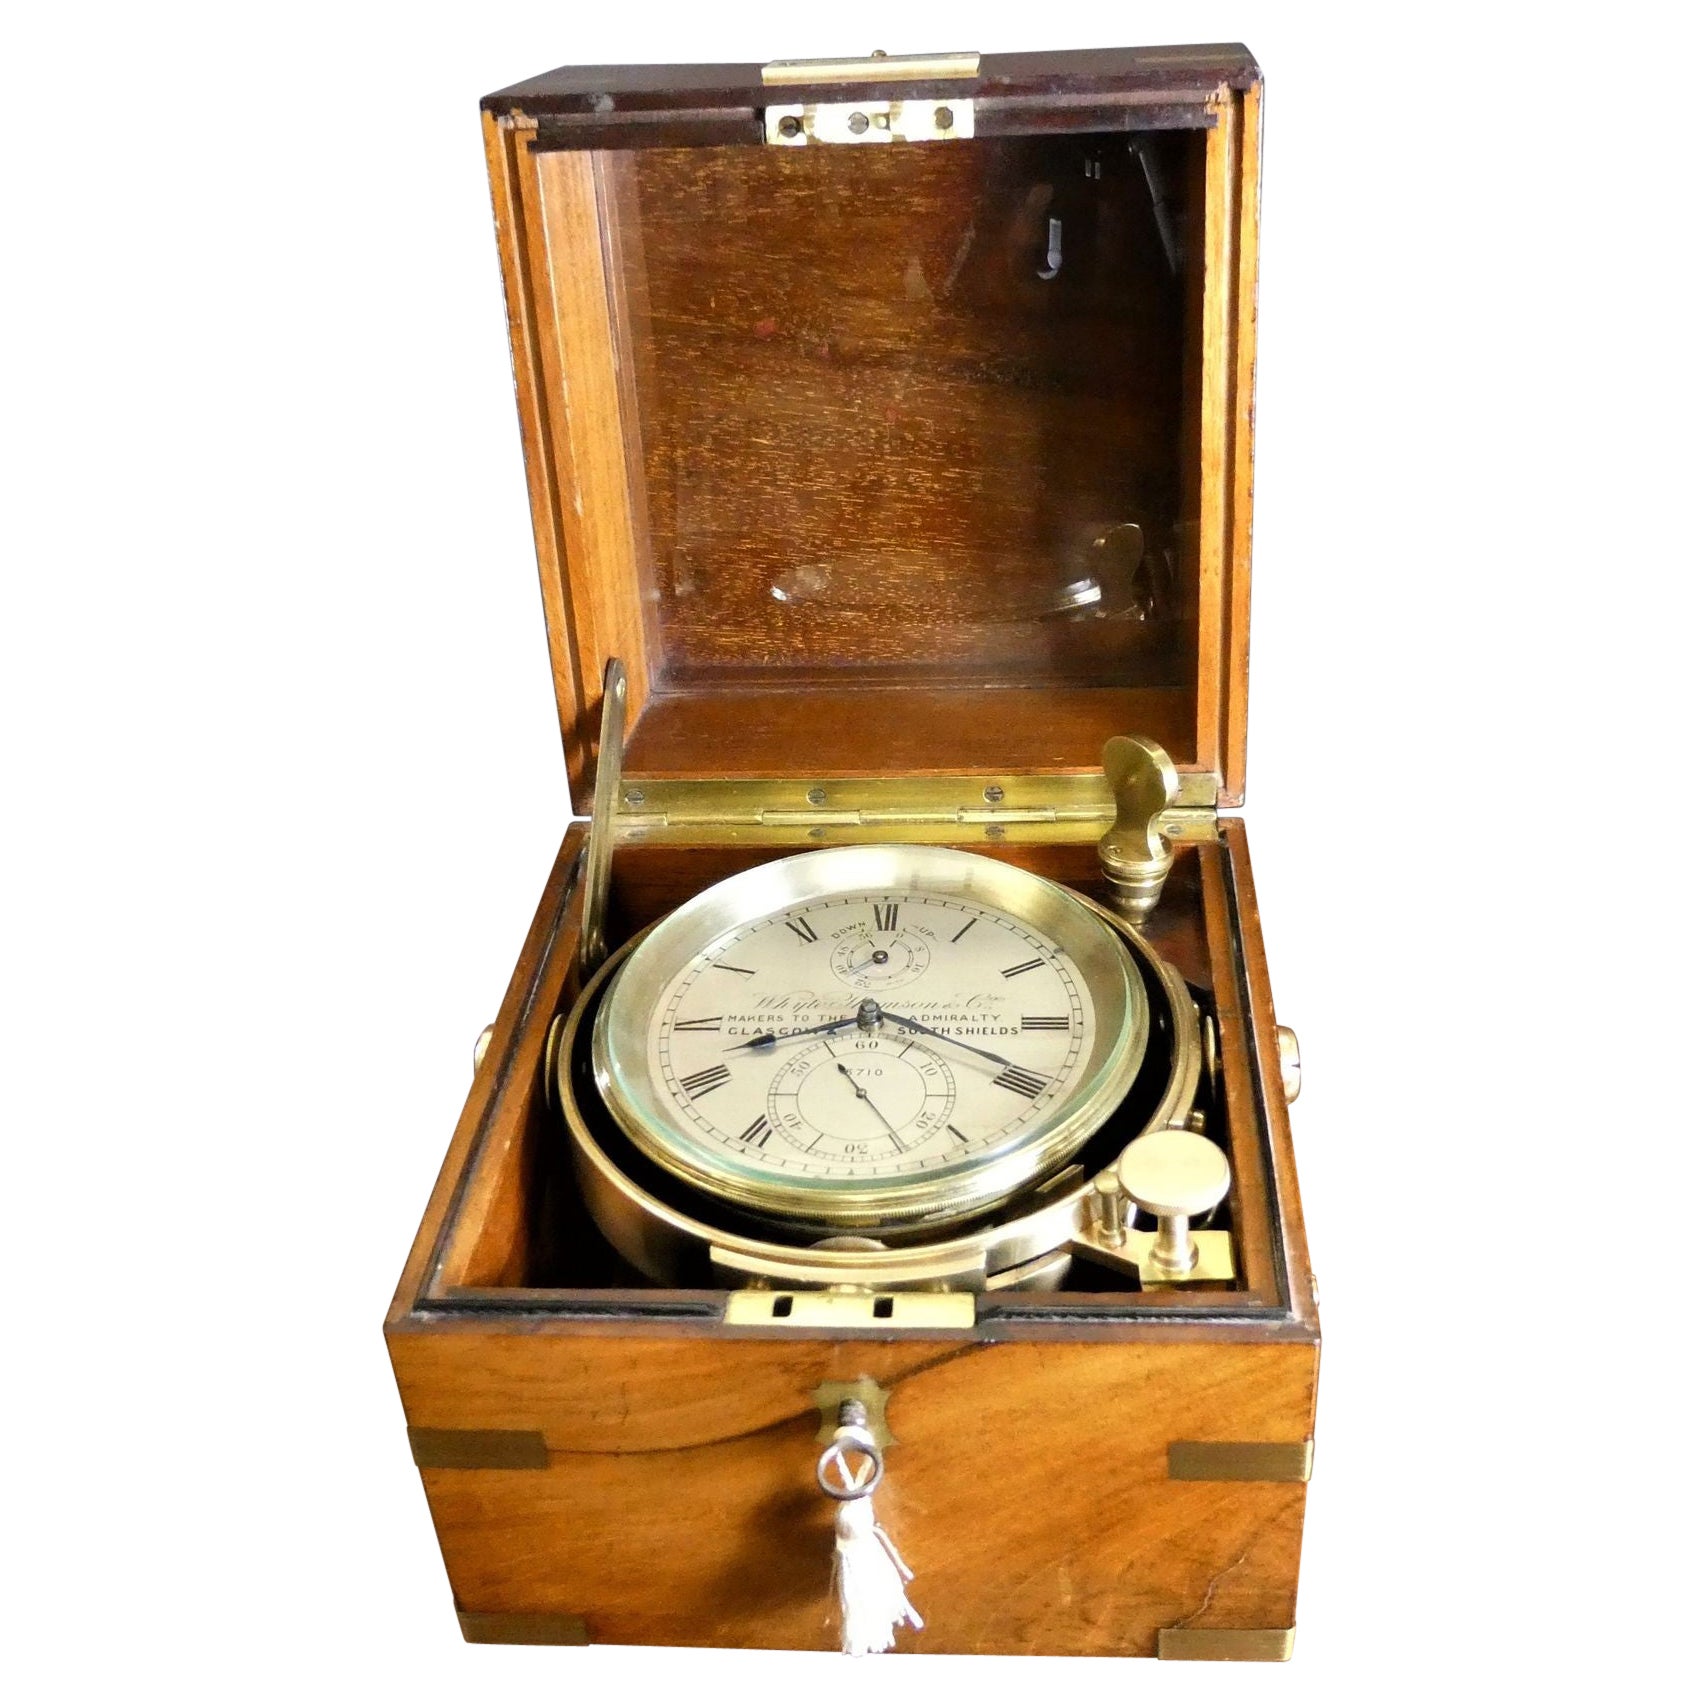 Are marine chronometers accurate?